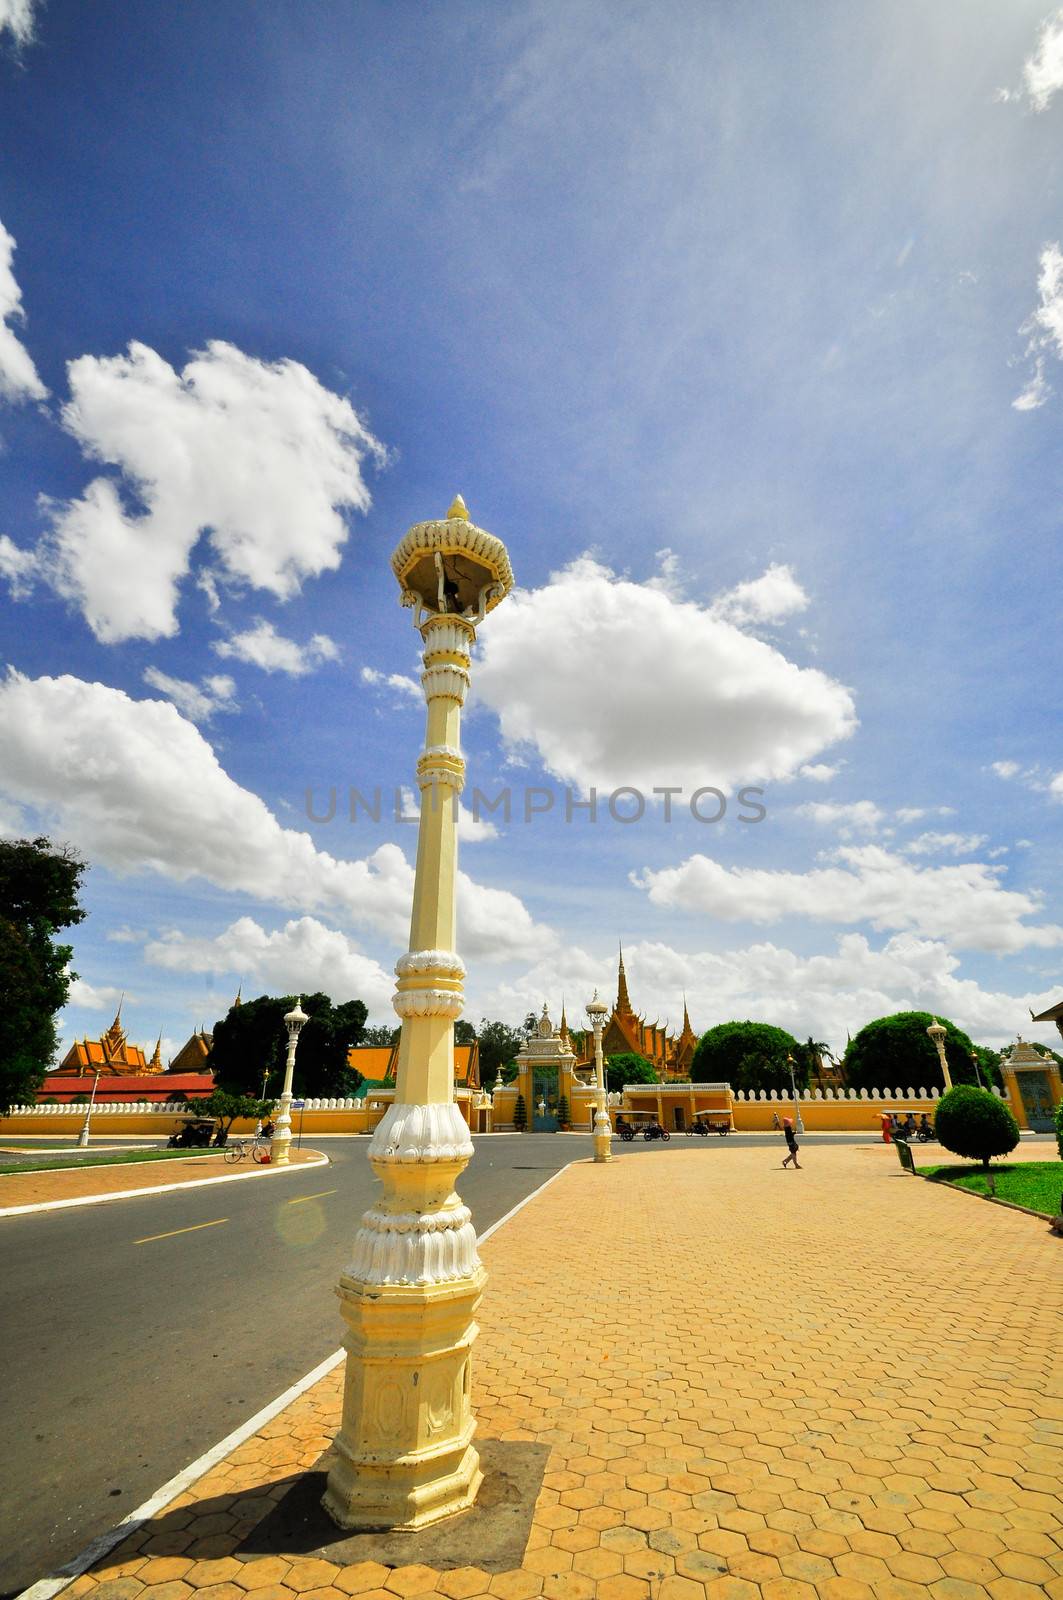 National Museum in Phnom Penh - Cambodia by weltreisendertj